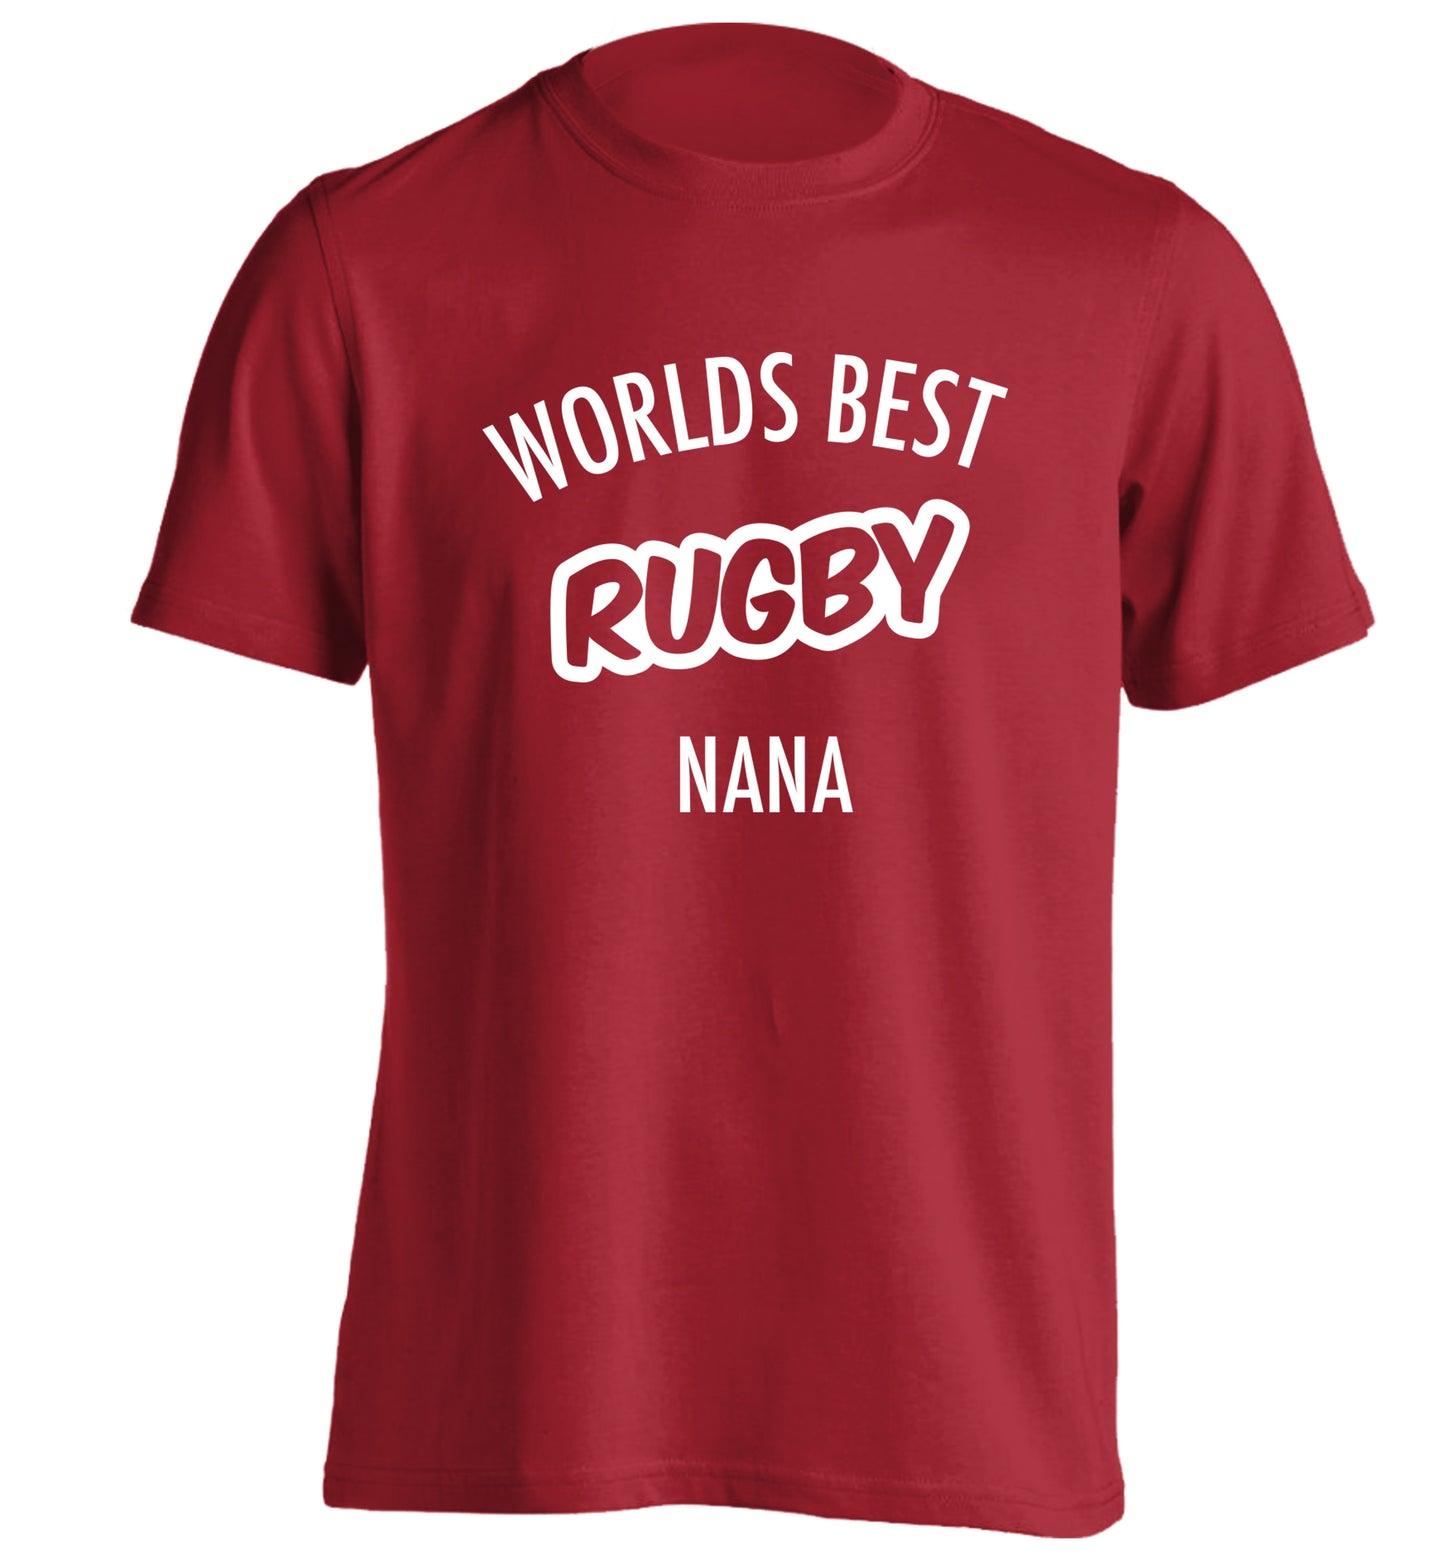 Worlds Best Rugby Grandma adults unisex red Tshirt 2XL